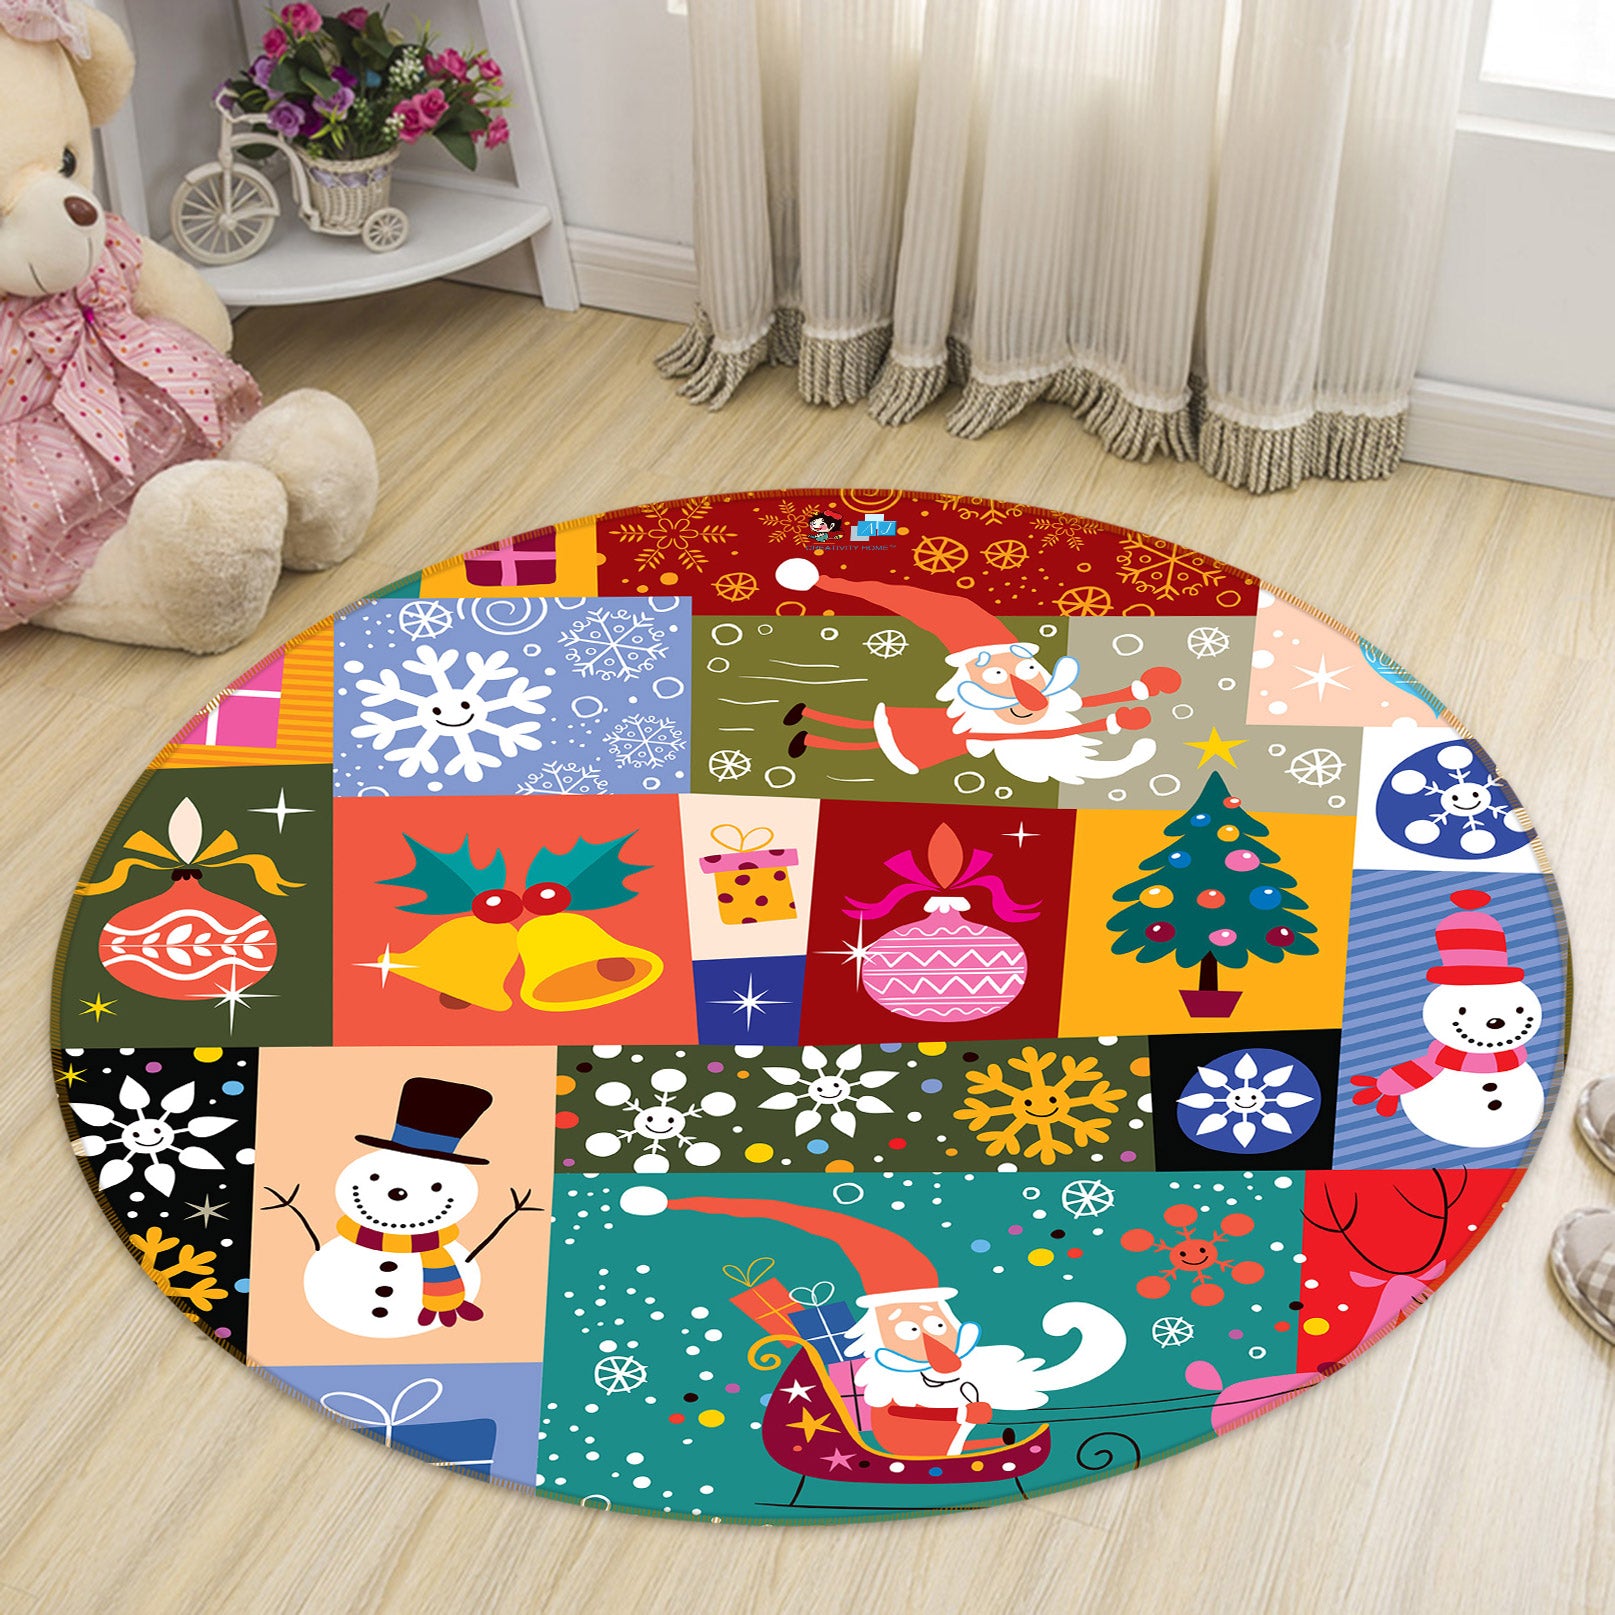 3D Colored Square Santa Snowflake 54007 Christmas Round Non Slip Rug Mat Xmas